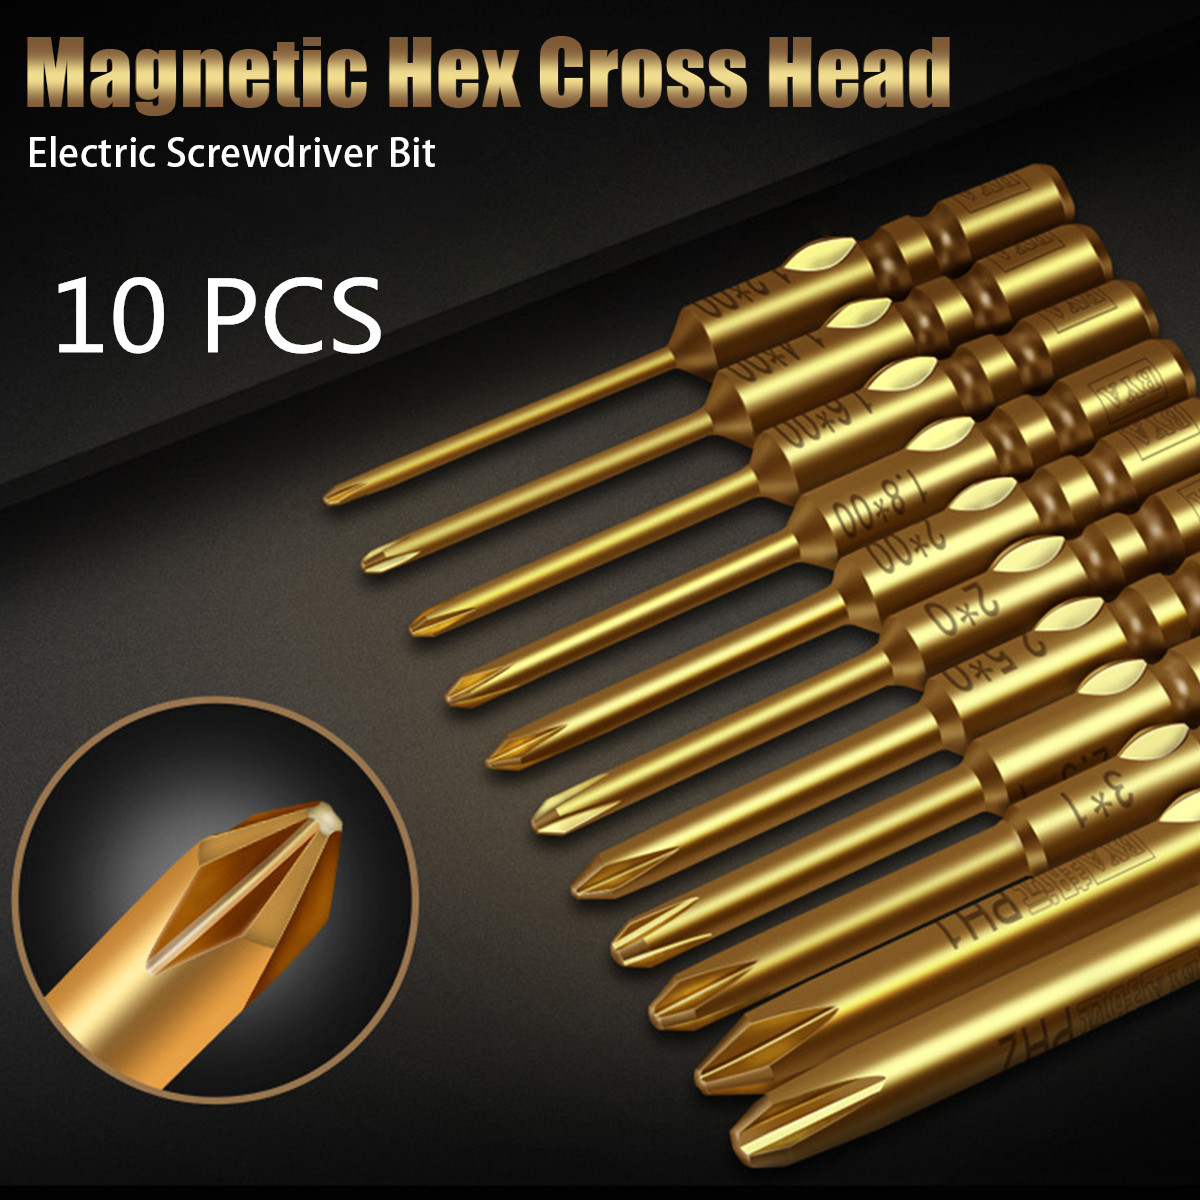 10Pcs-40mm-Magnetic-Screwdriver-Bits-Hex-Cross-Head-PH0-PH1-PH2-Bit-For-Electric-Screwdriver-1556070-2